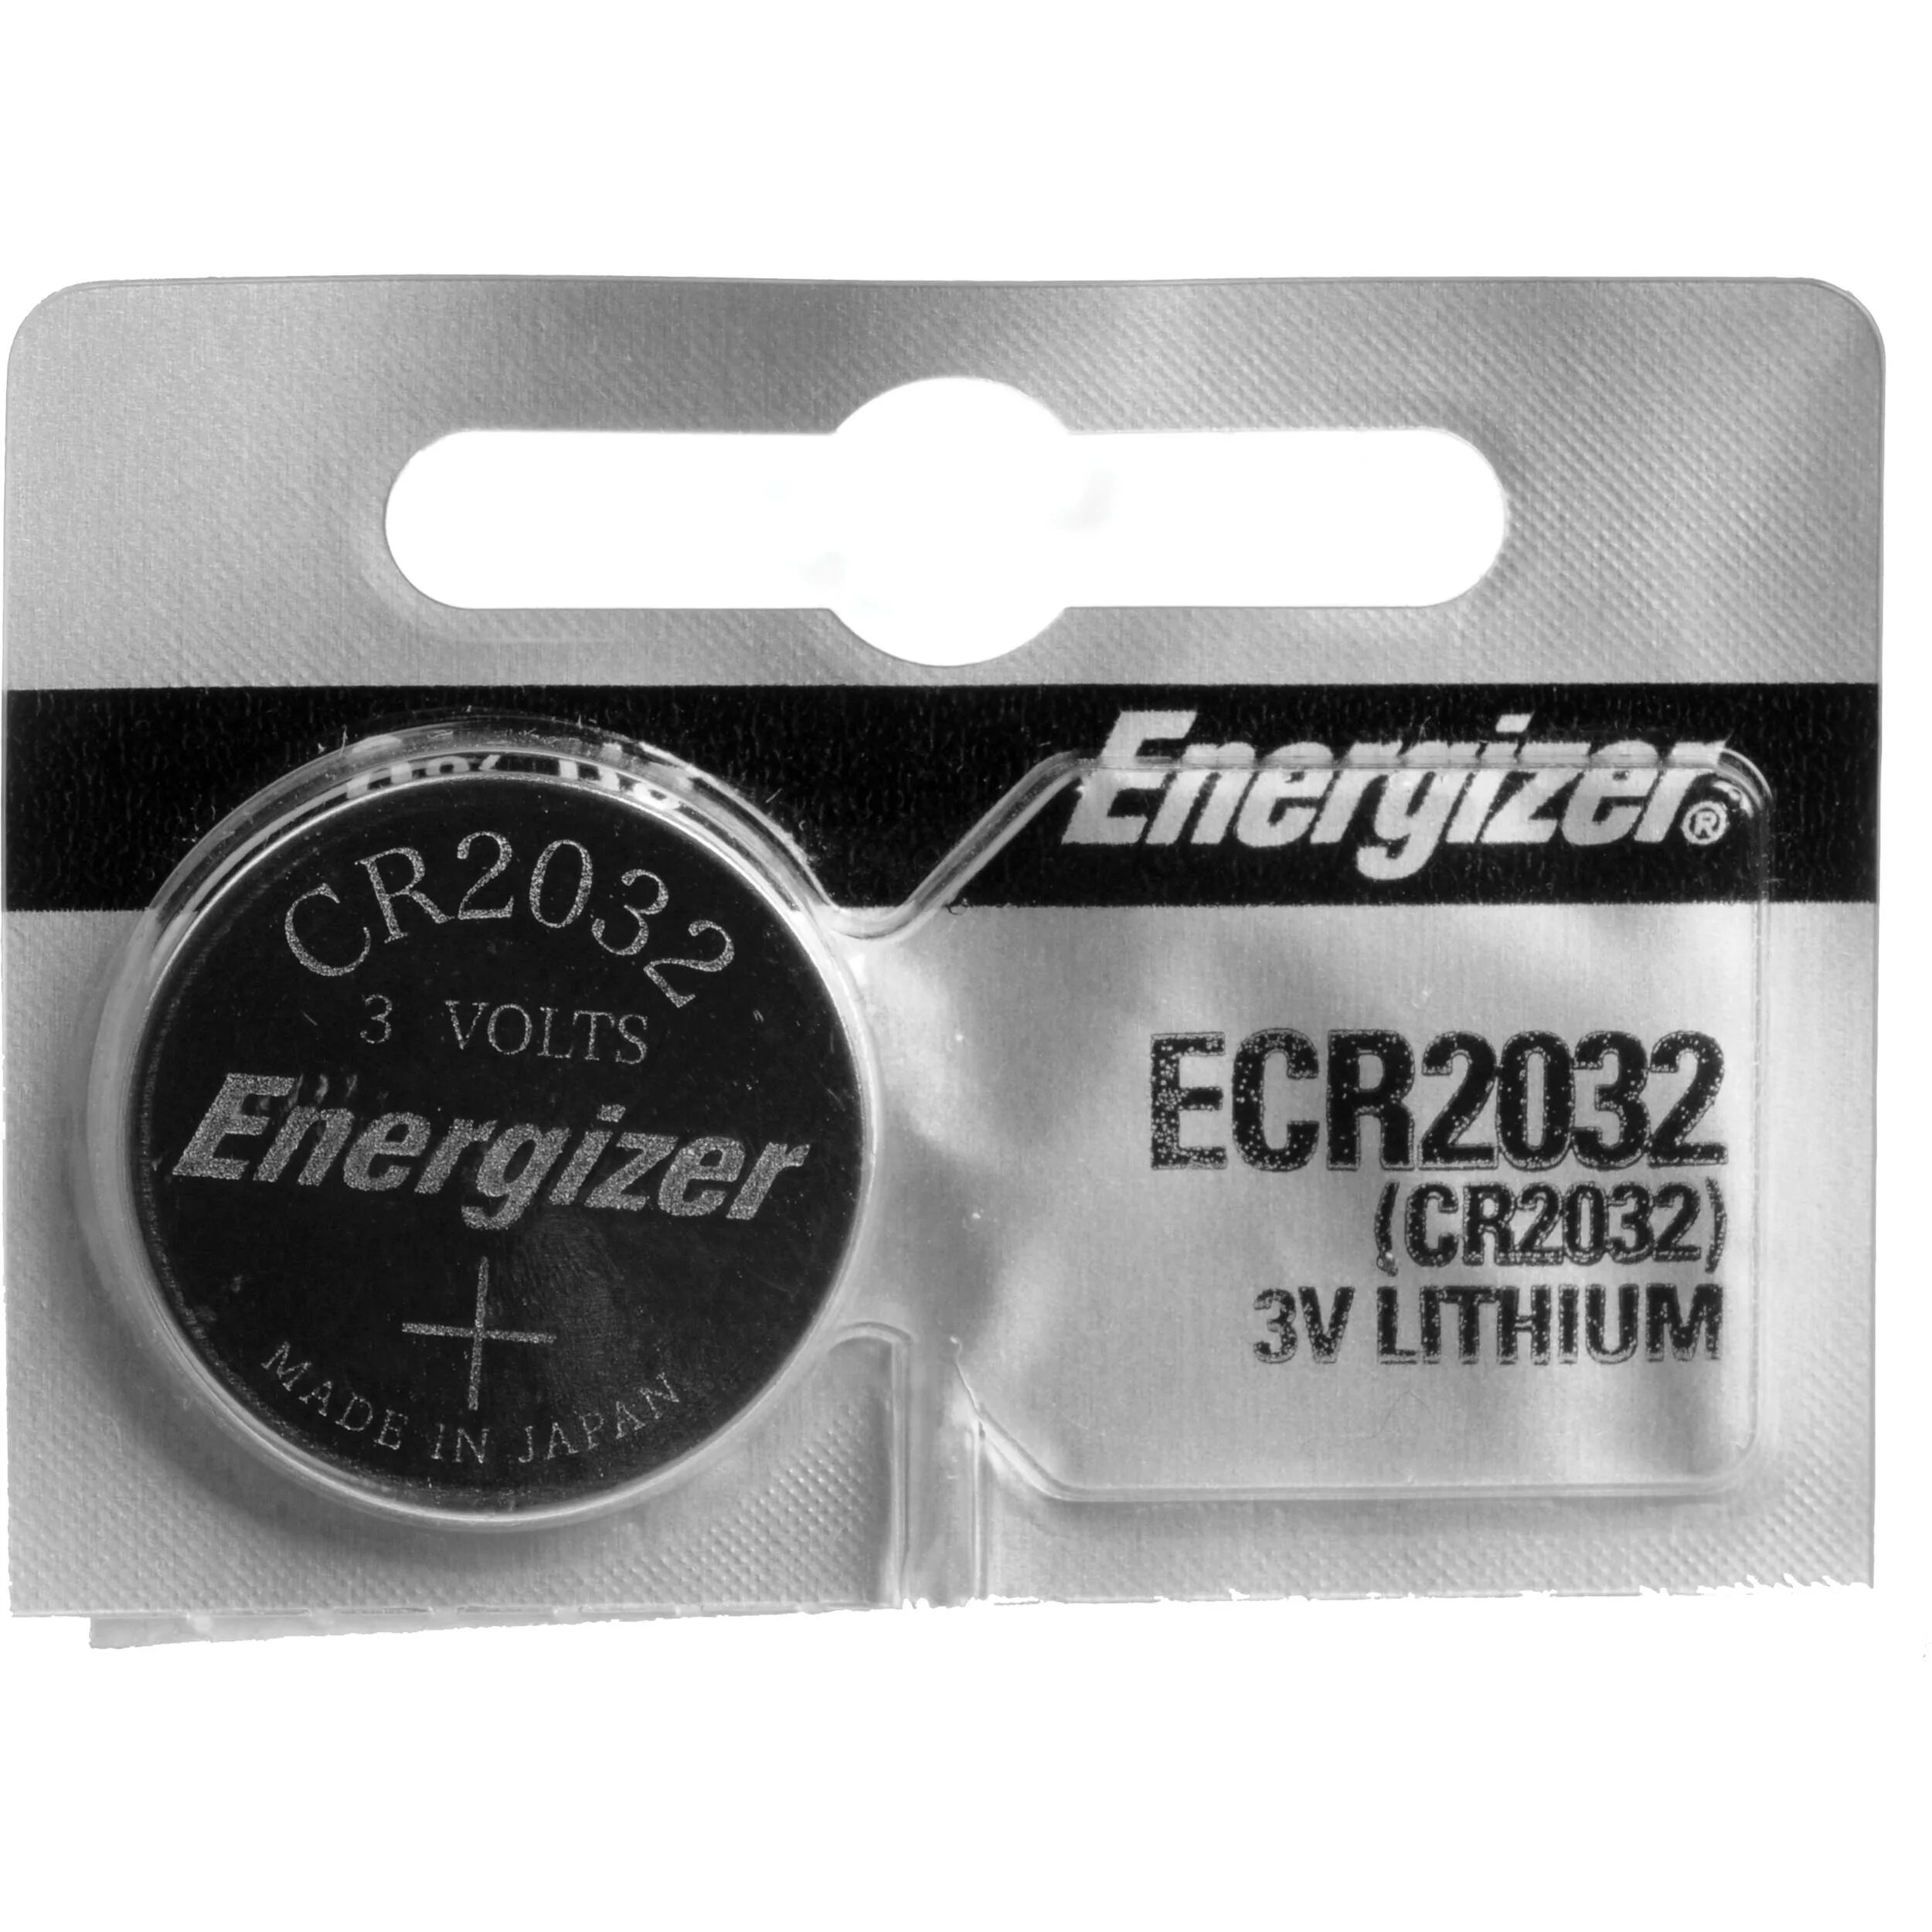 Литиум батарейка 2032. Батарейка cr2032 Energizer. Cr2032 батарейка Energizer Lithium. Батарейка cr2032 (3v).